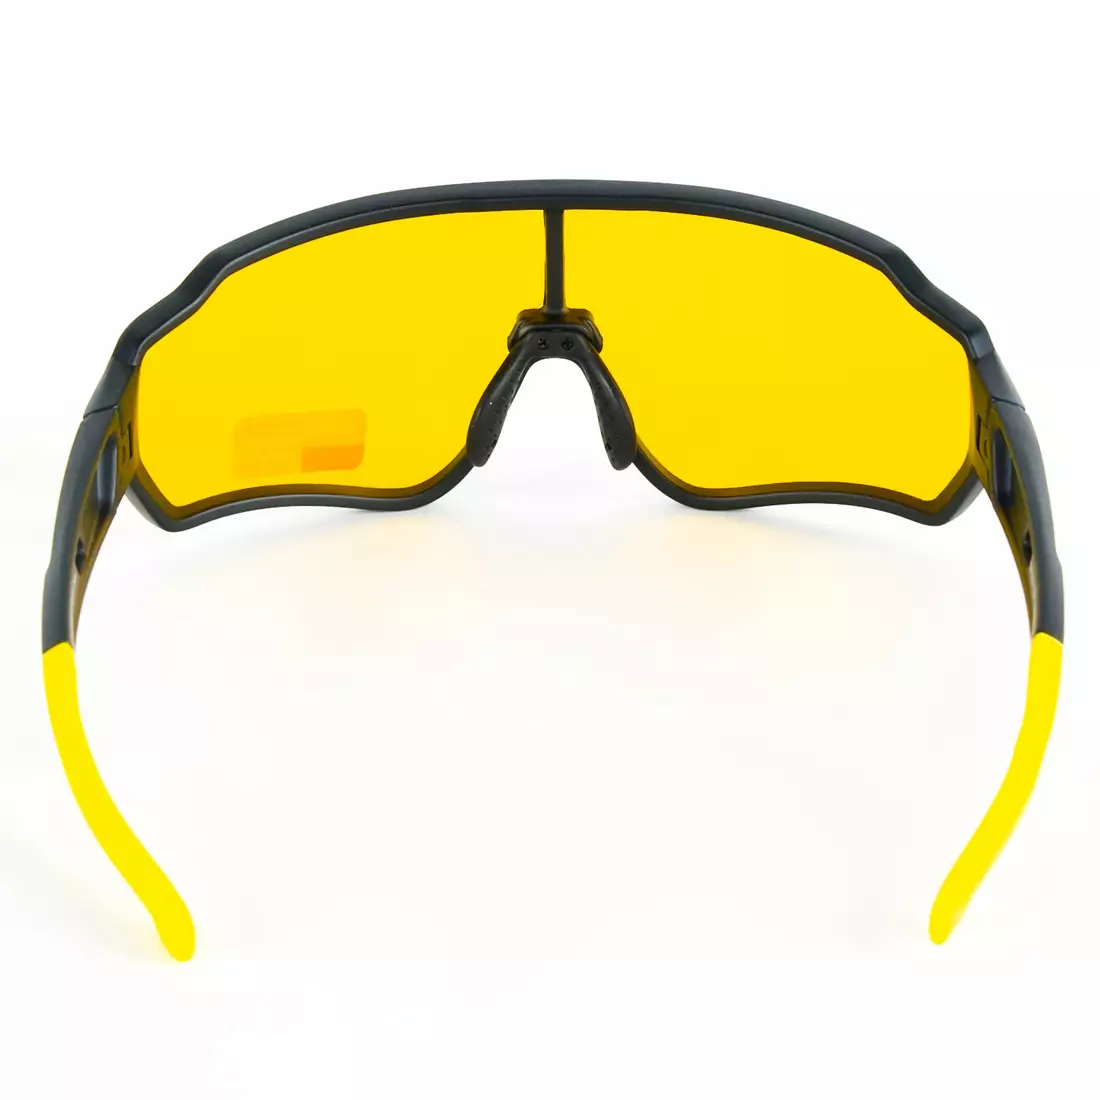 Rockbros 10164 bicycle sports glasses with polarized black-yellow